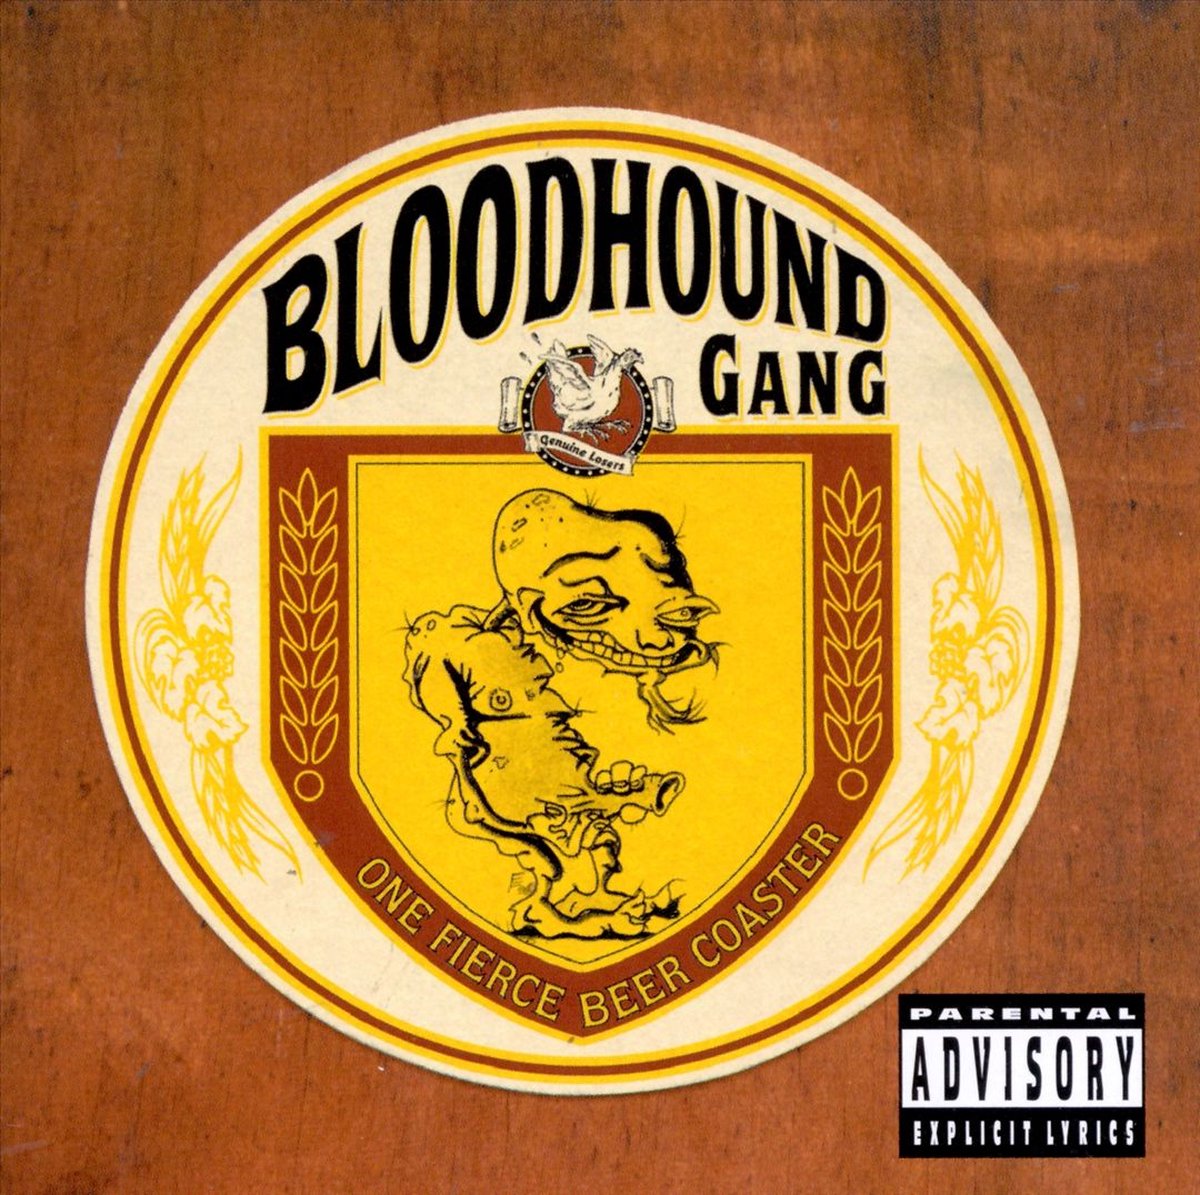 One Fierce Beer Coaster - Bloodhound Gang